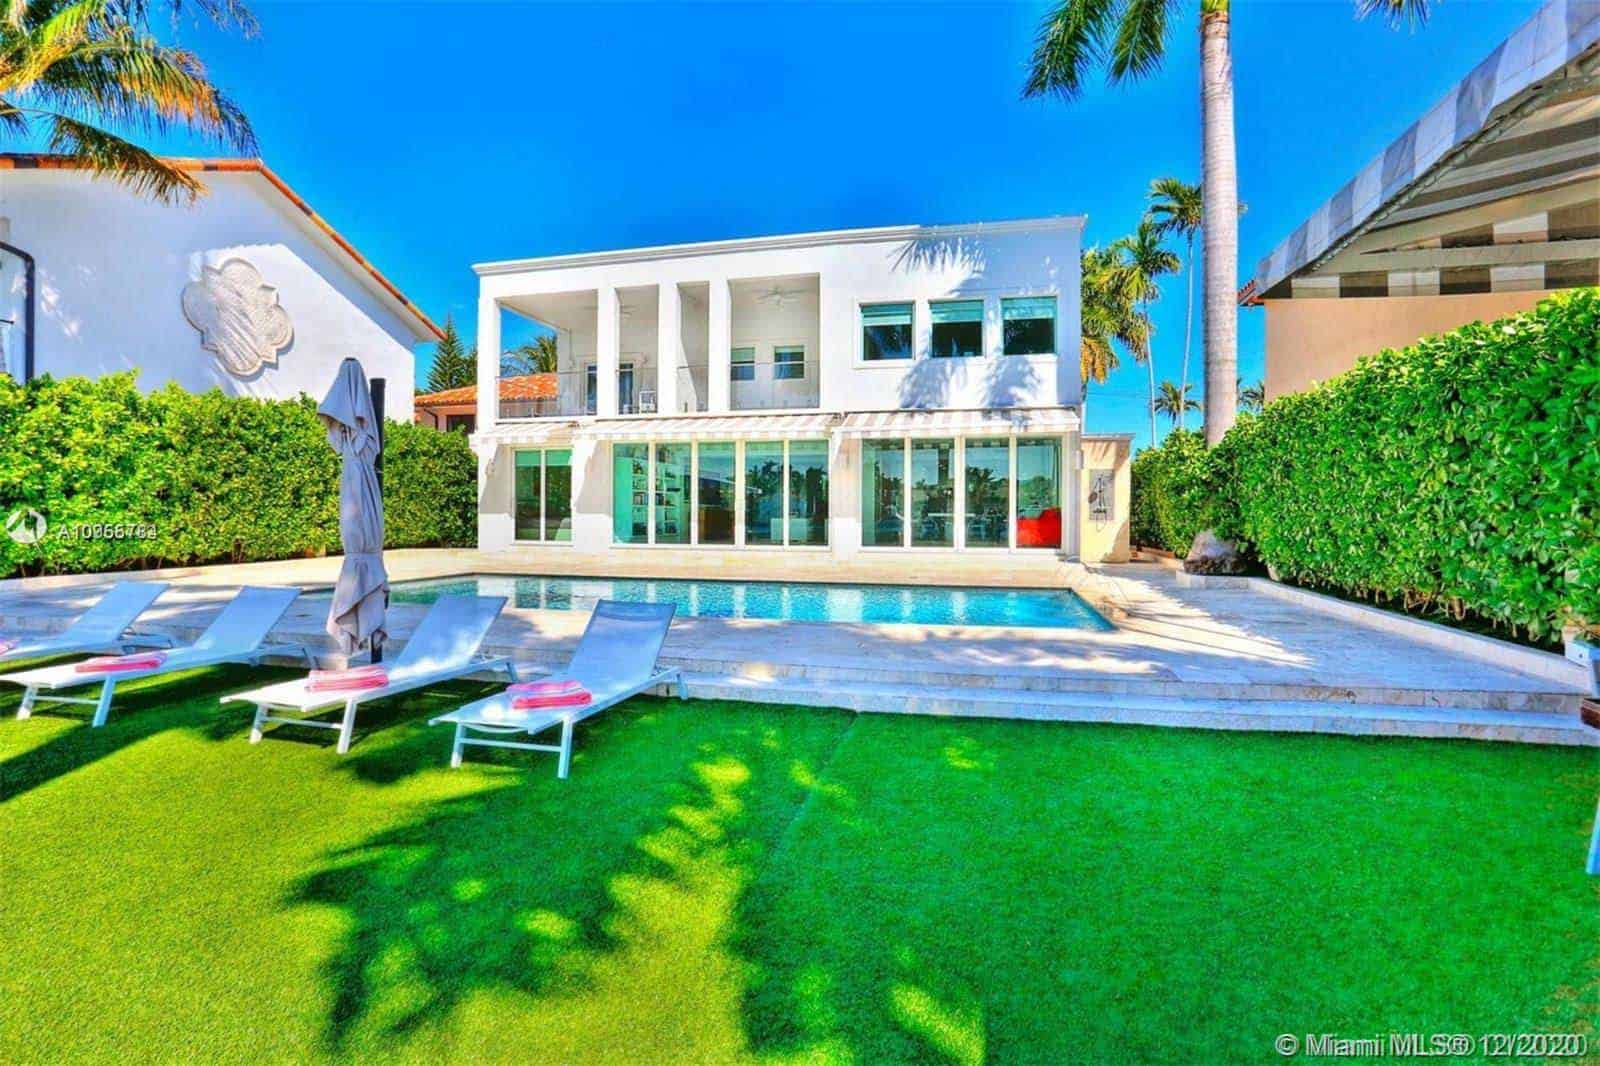 94 S HIBISCUS DR, MIAMI BEACH, FL 33139: Ultra-Luxury Homes for Sale in Miami Beach